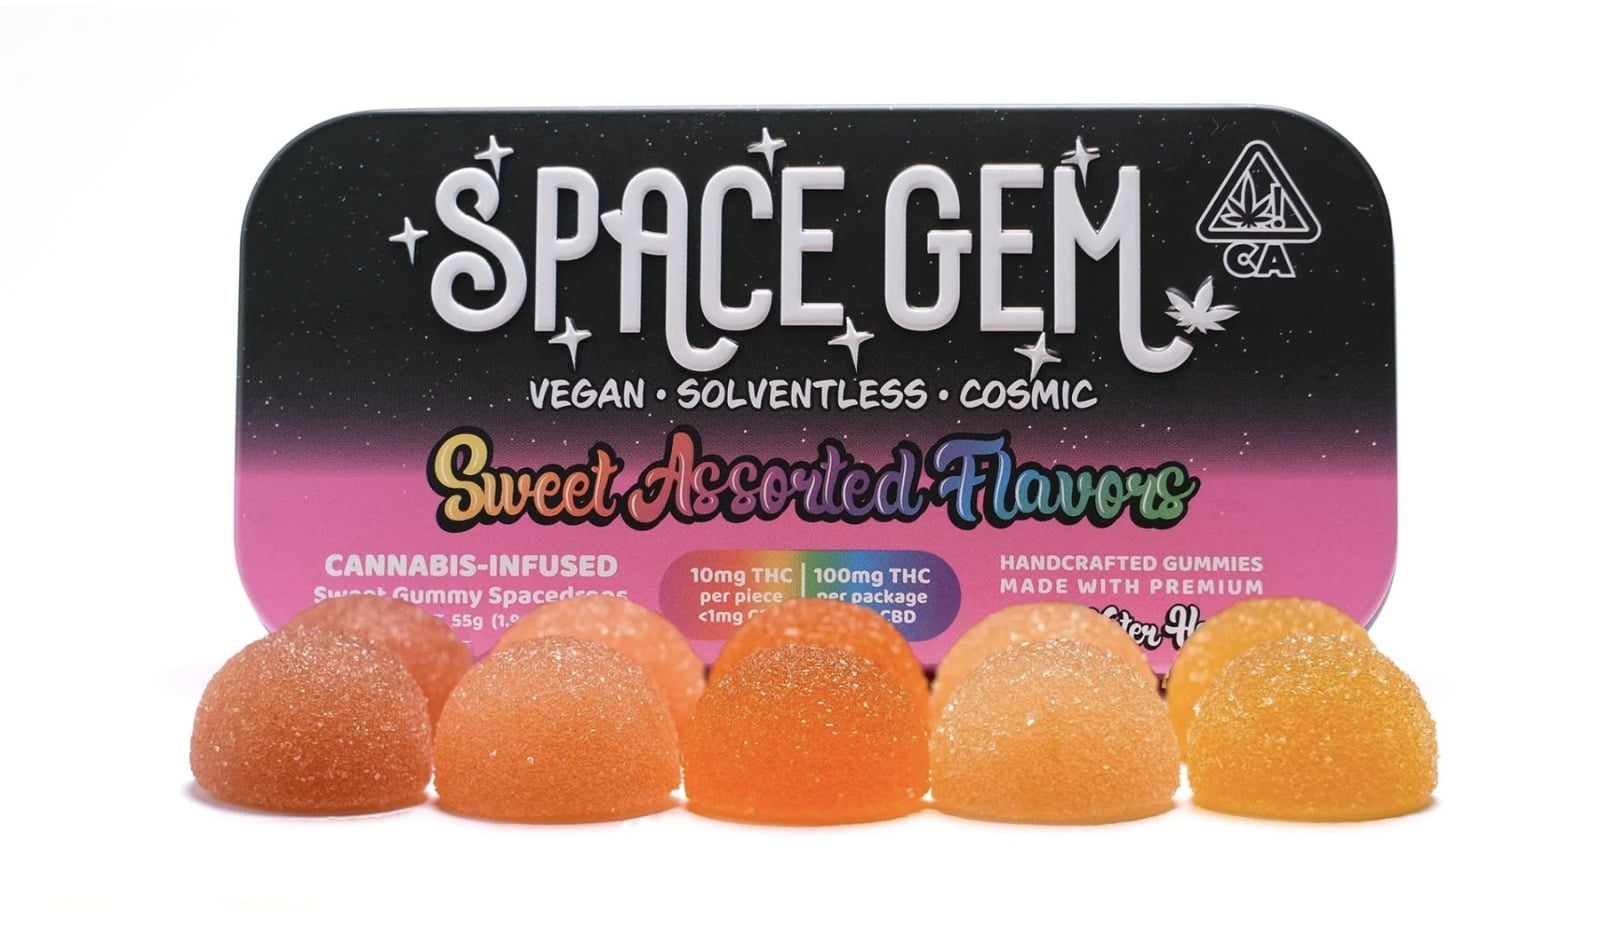 Space Gem Sweet Gummy SpaceDrops 100mg THC